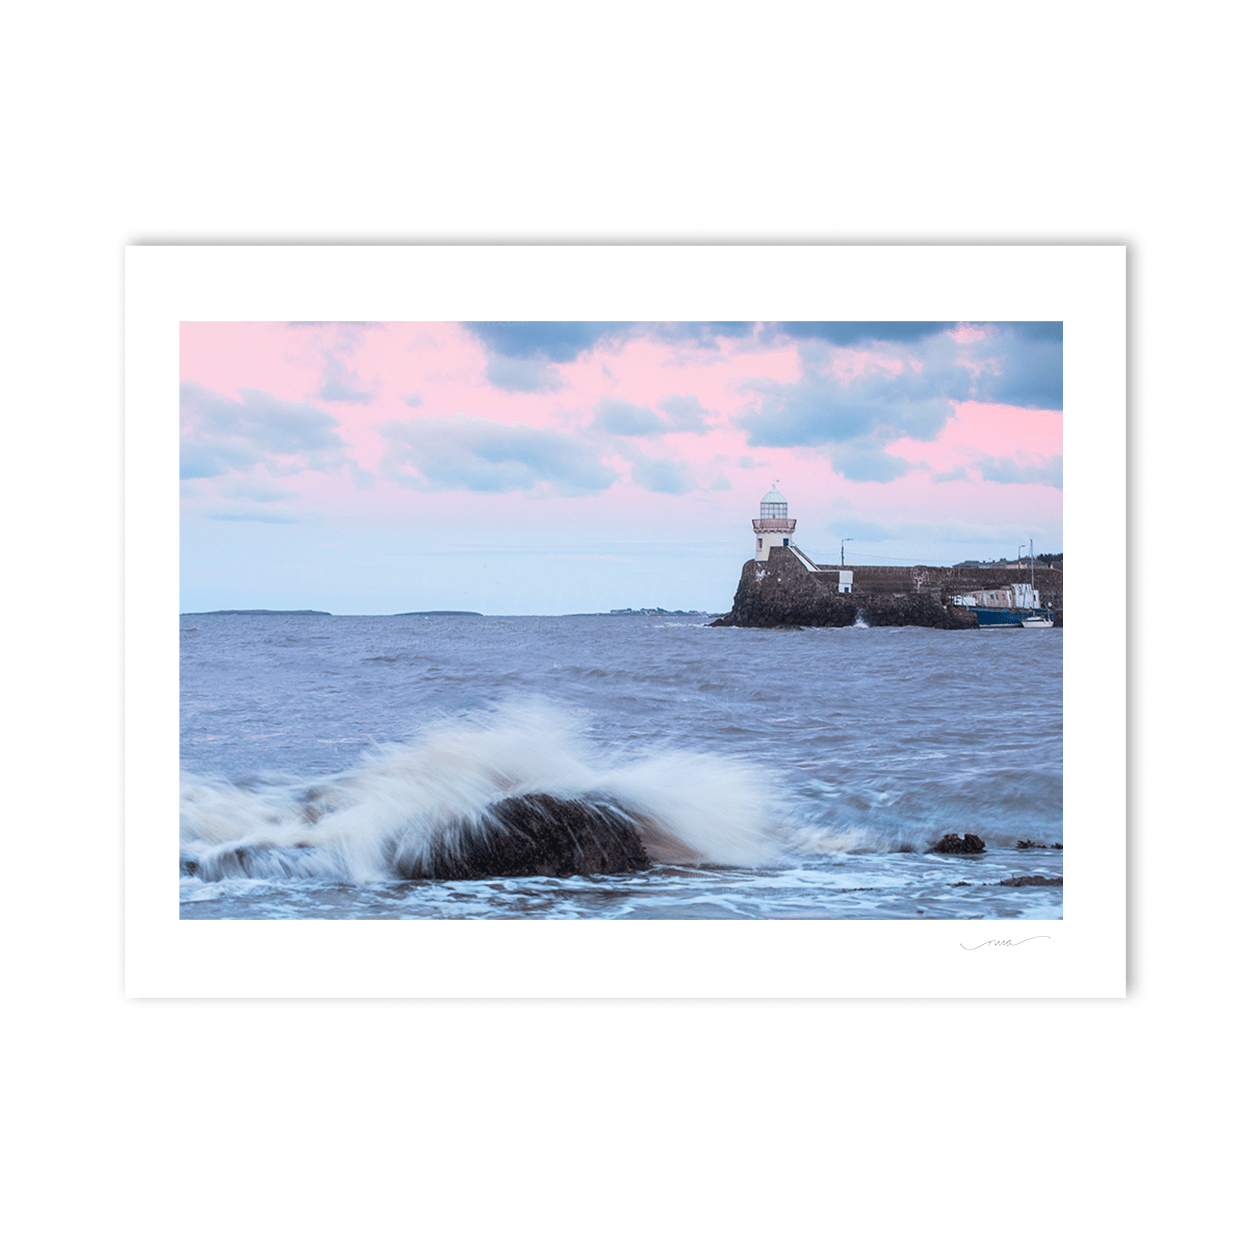 Nua Photography Print Balbriggan harbour Lighthouse with pink evening skies